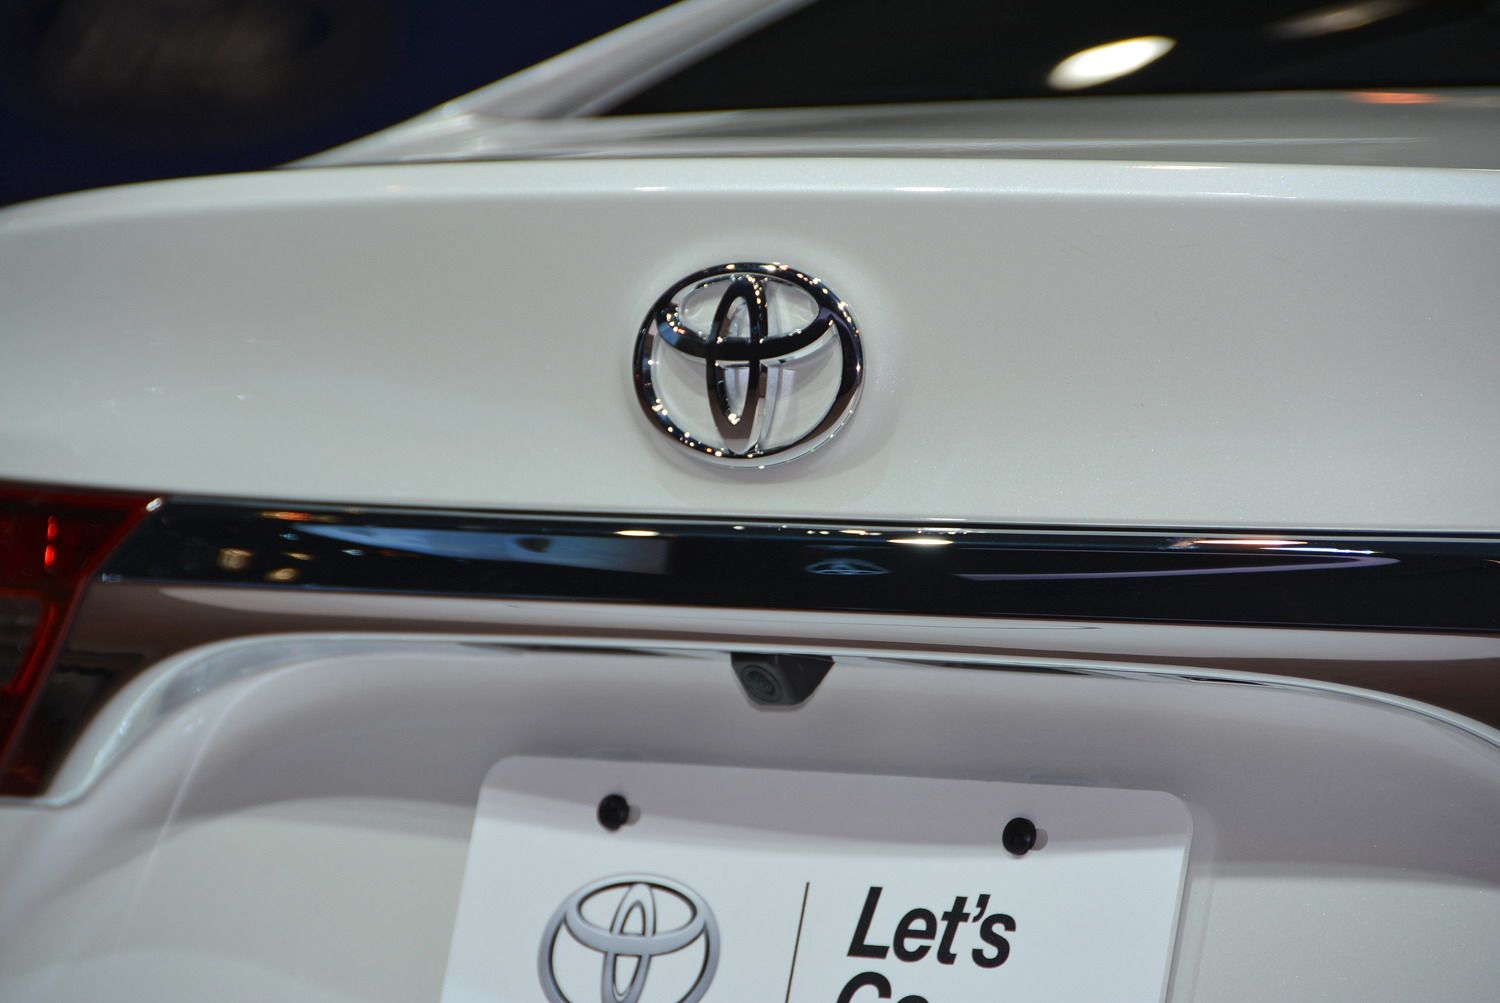 2016 Toyota Avalon